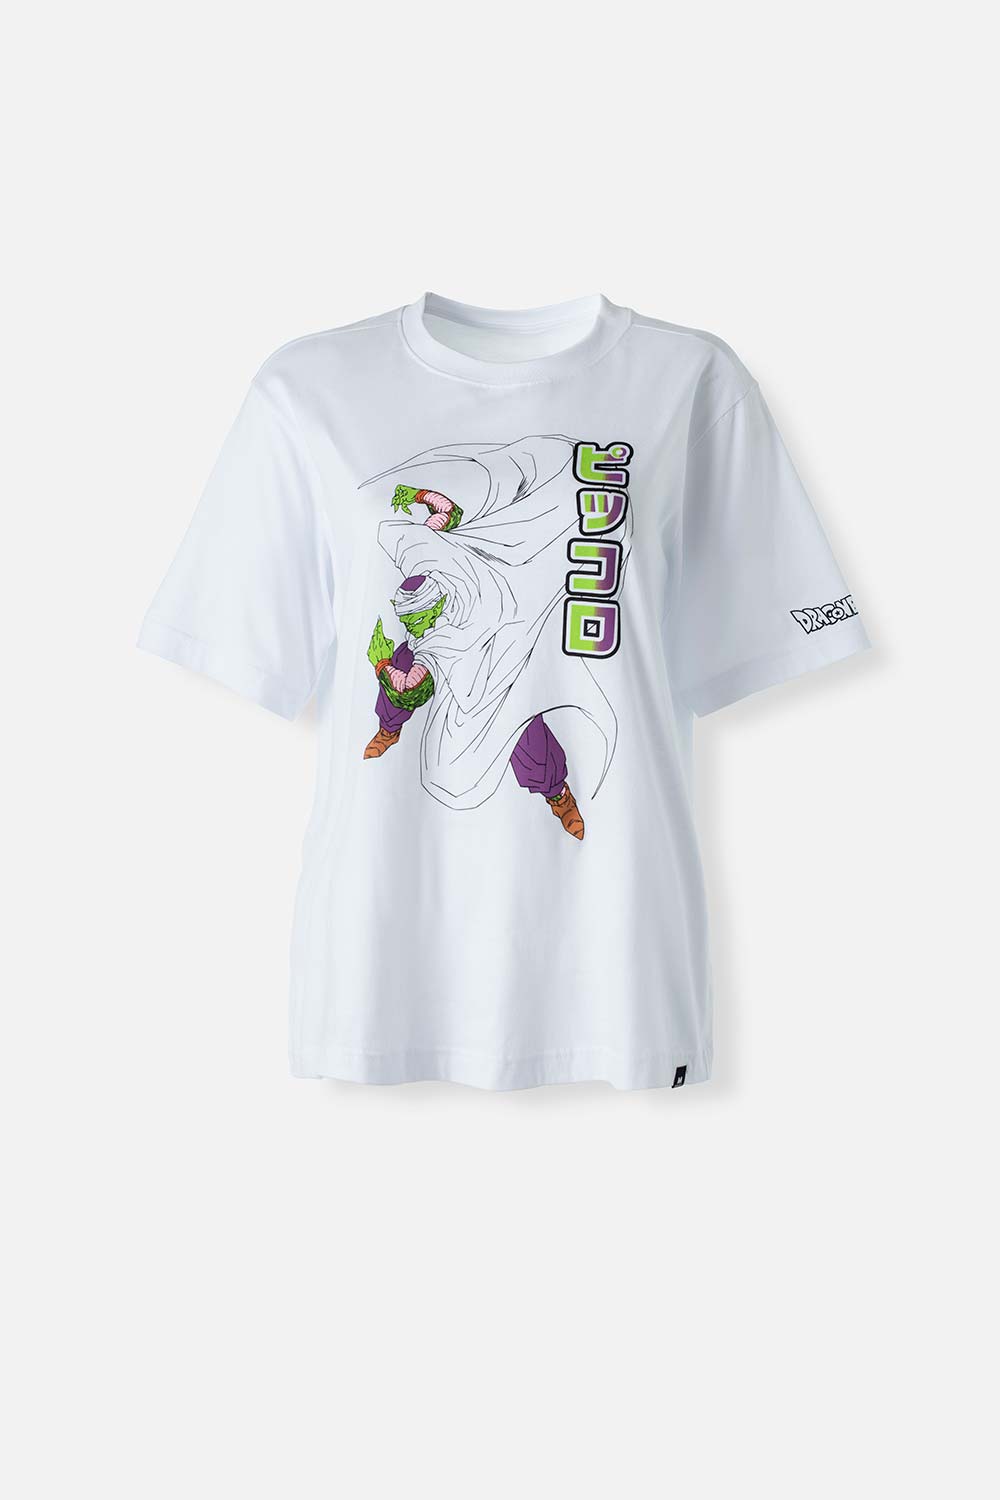 Camiseta de Dragon Ball Z manga corta blanca para mujer XS-0